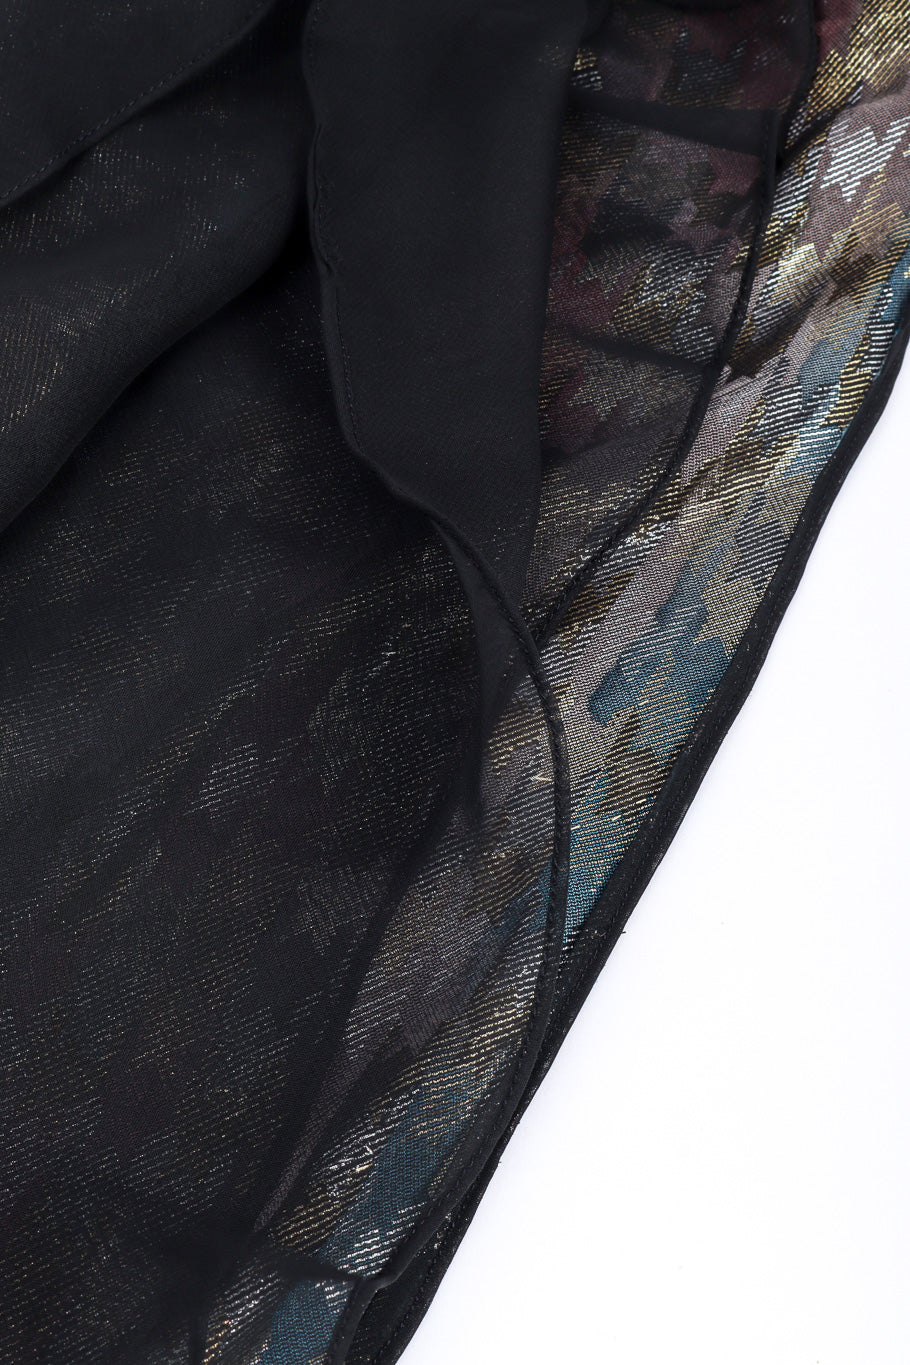 Vintage Judy Hornby Metallic Silk Velvet Dress bottom hem closeup @recessla